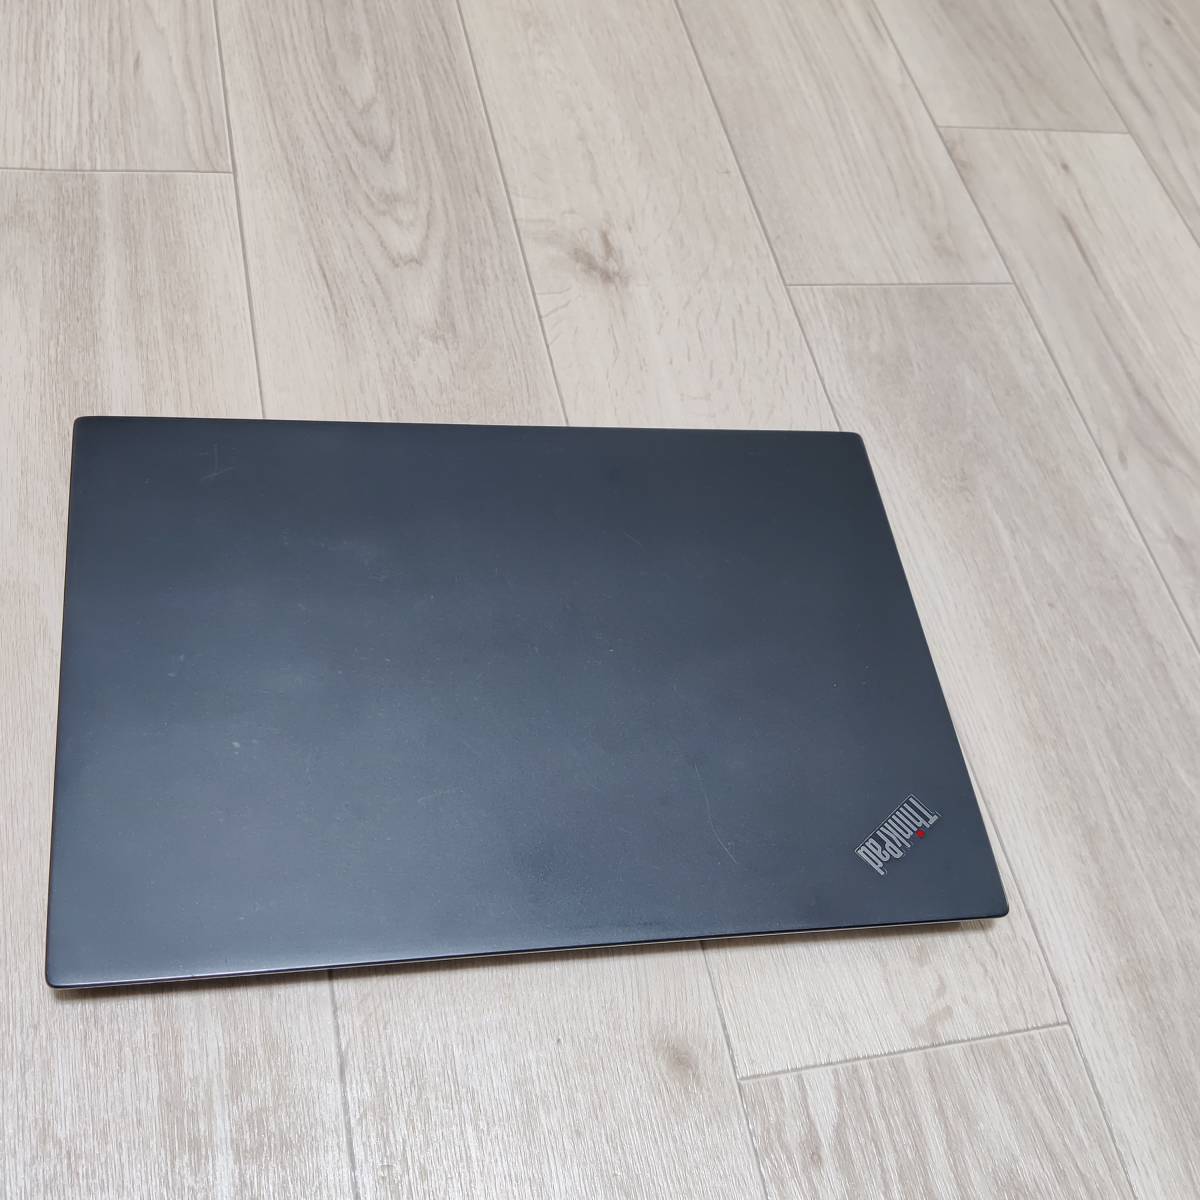 【KWNKAS】Lenovo ThinkPad T480s core i7 8650U 8GB 本体のみ ジャンク JUNK_画像1